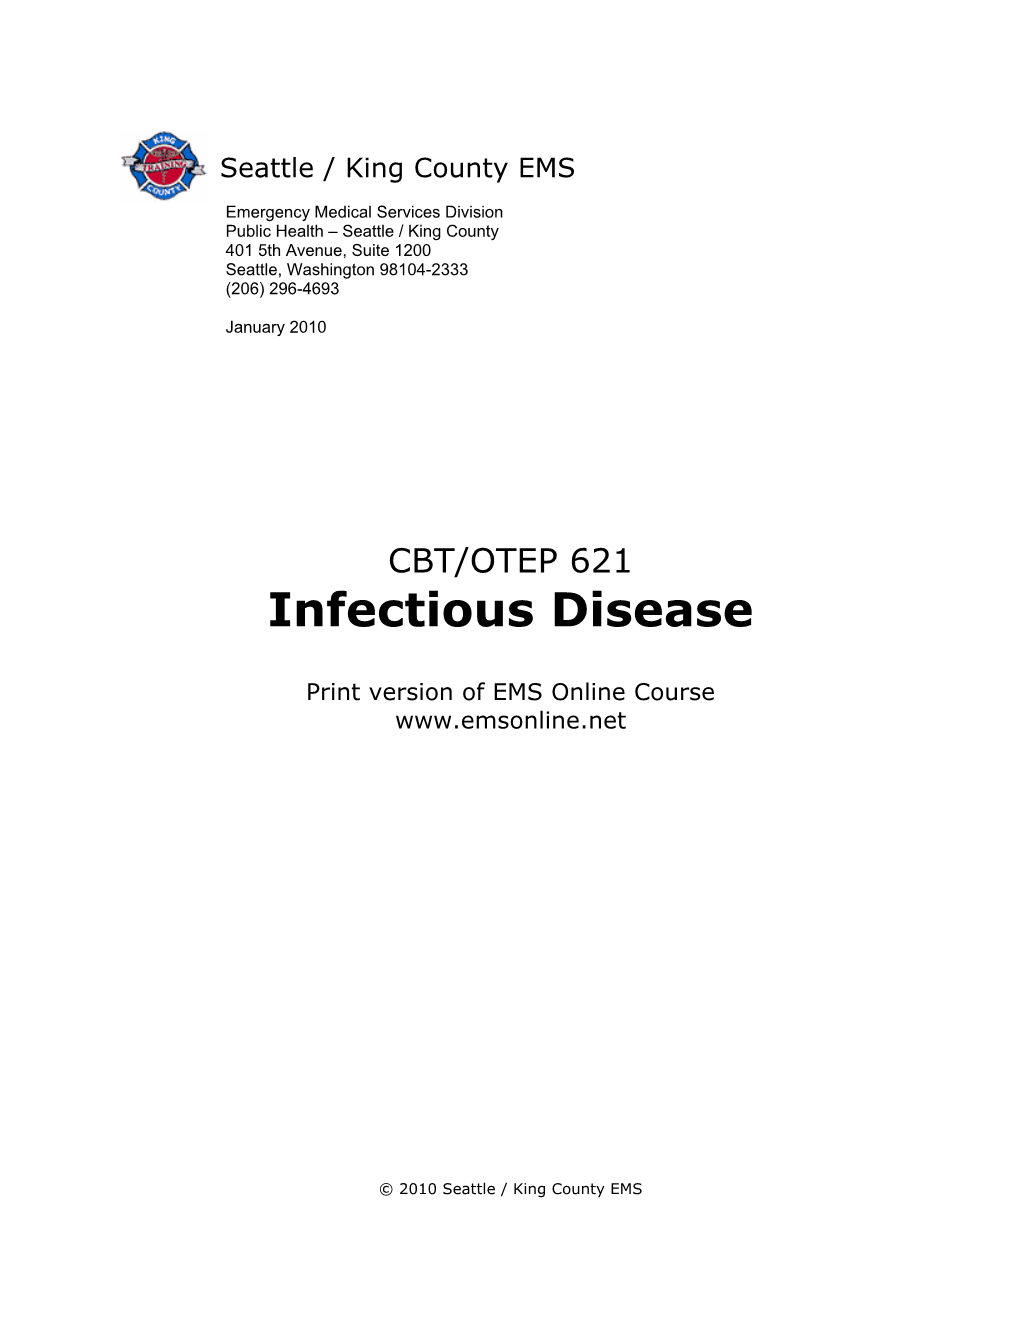 CBT 621 Infectious Disease